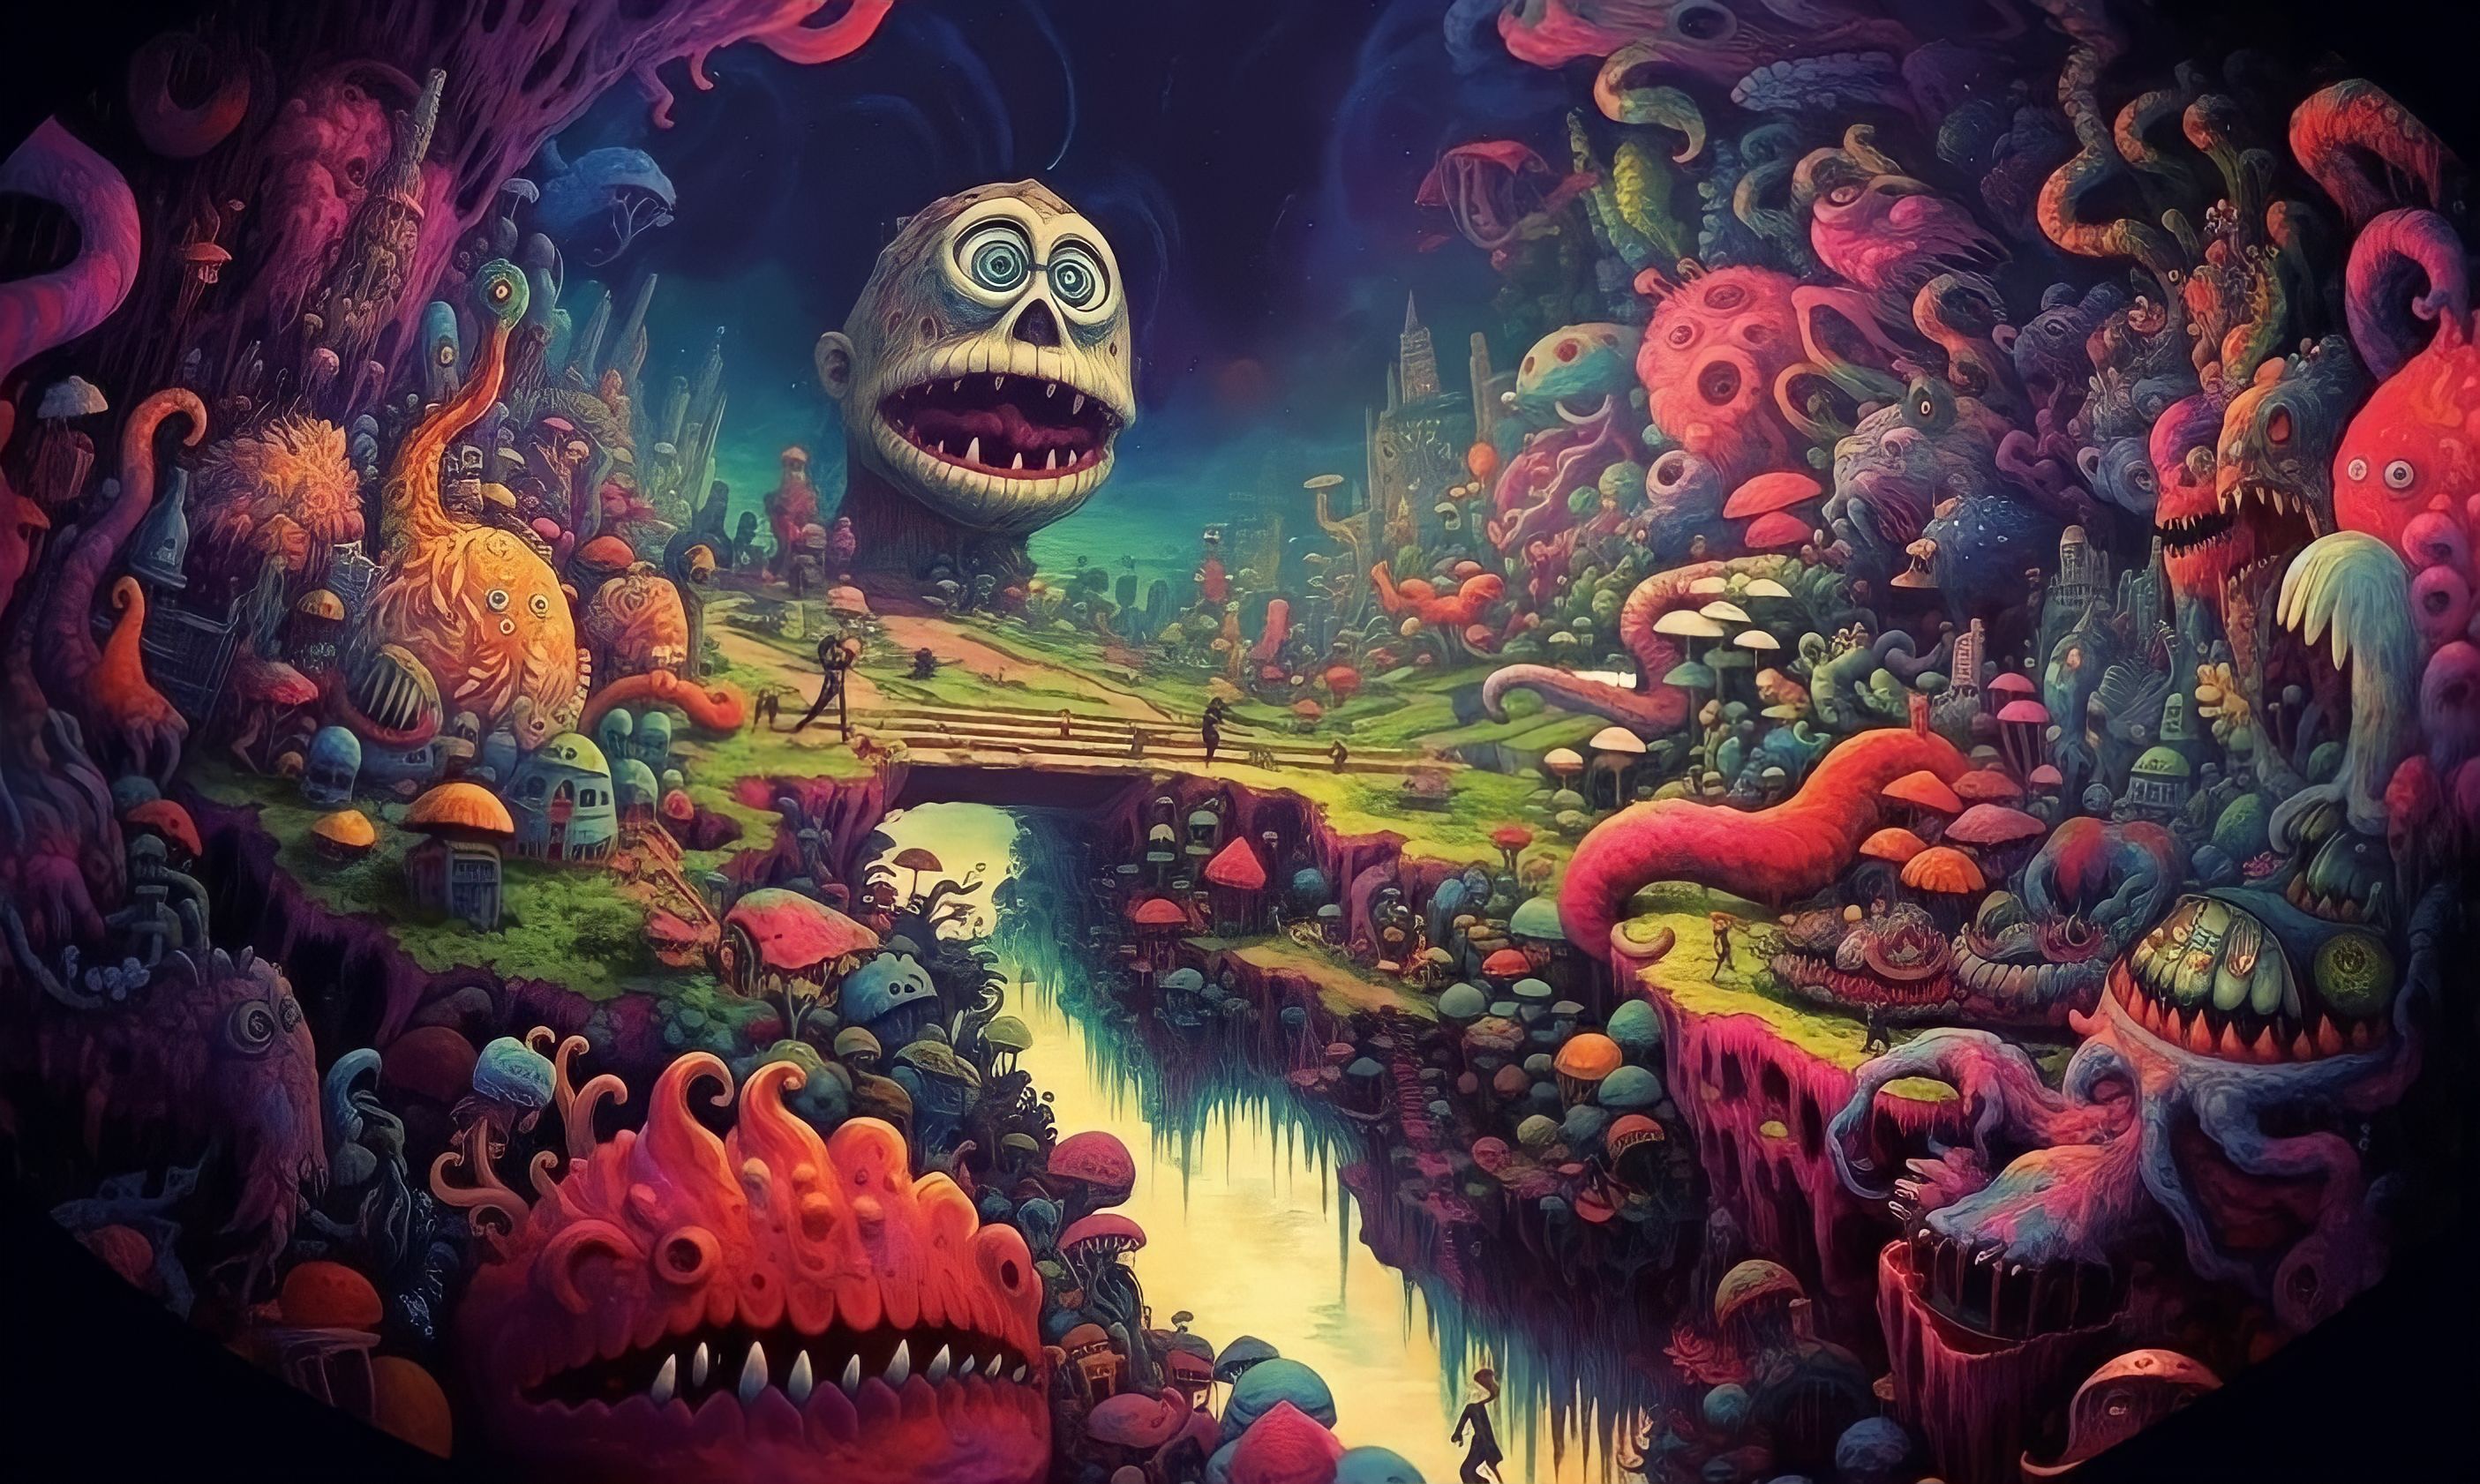 Weirdcore/dreamcore wallpaper by SodaDoggie on DeviantArt